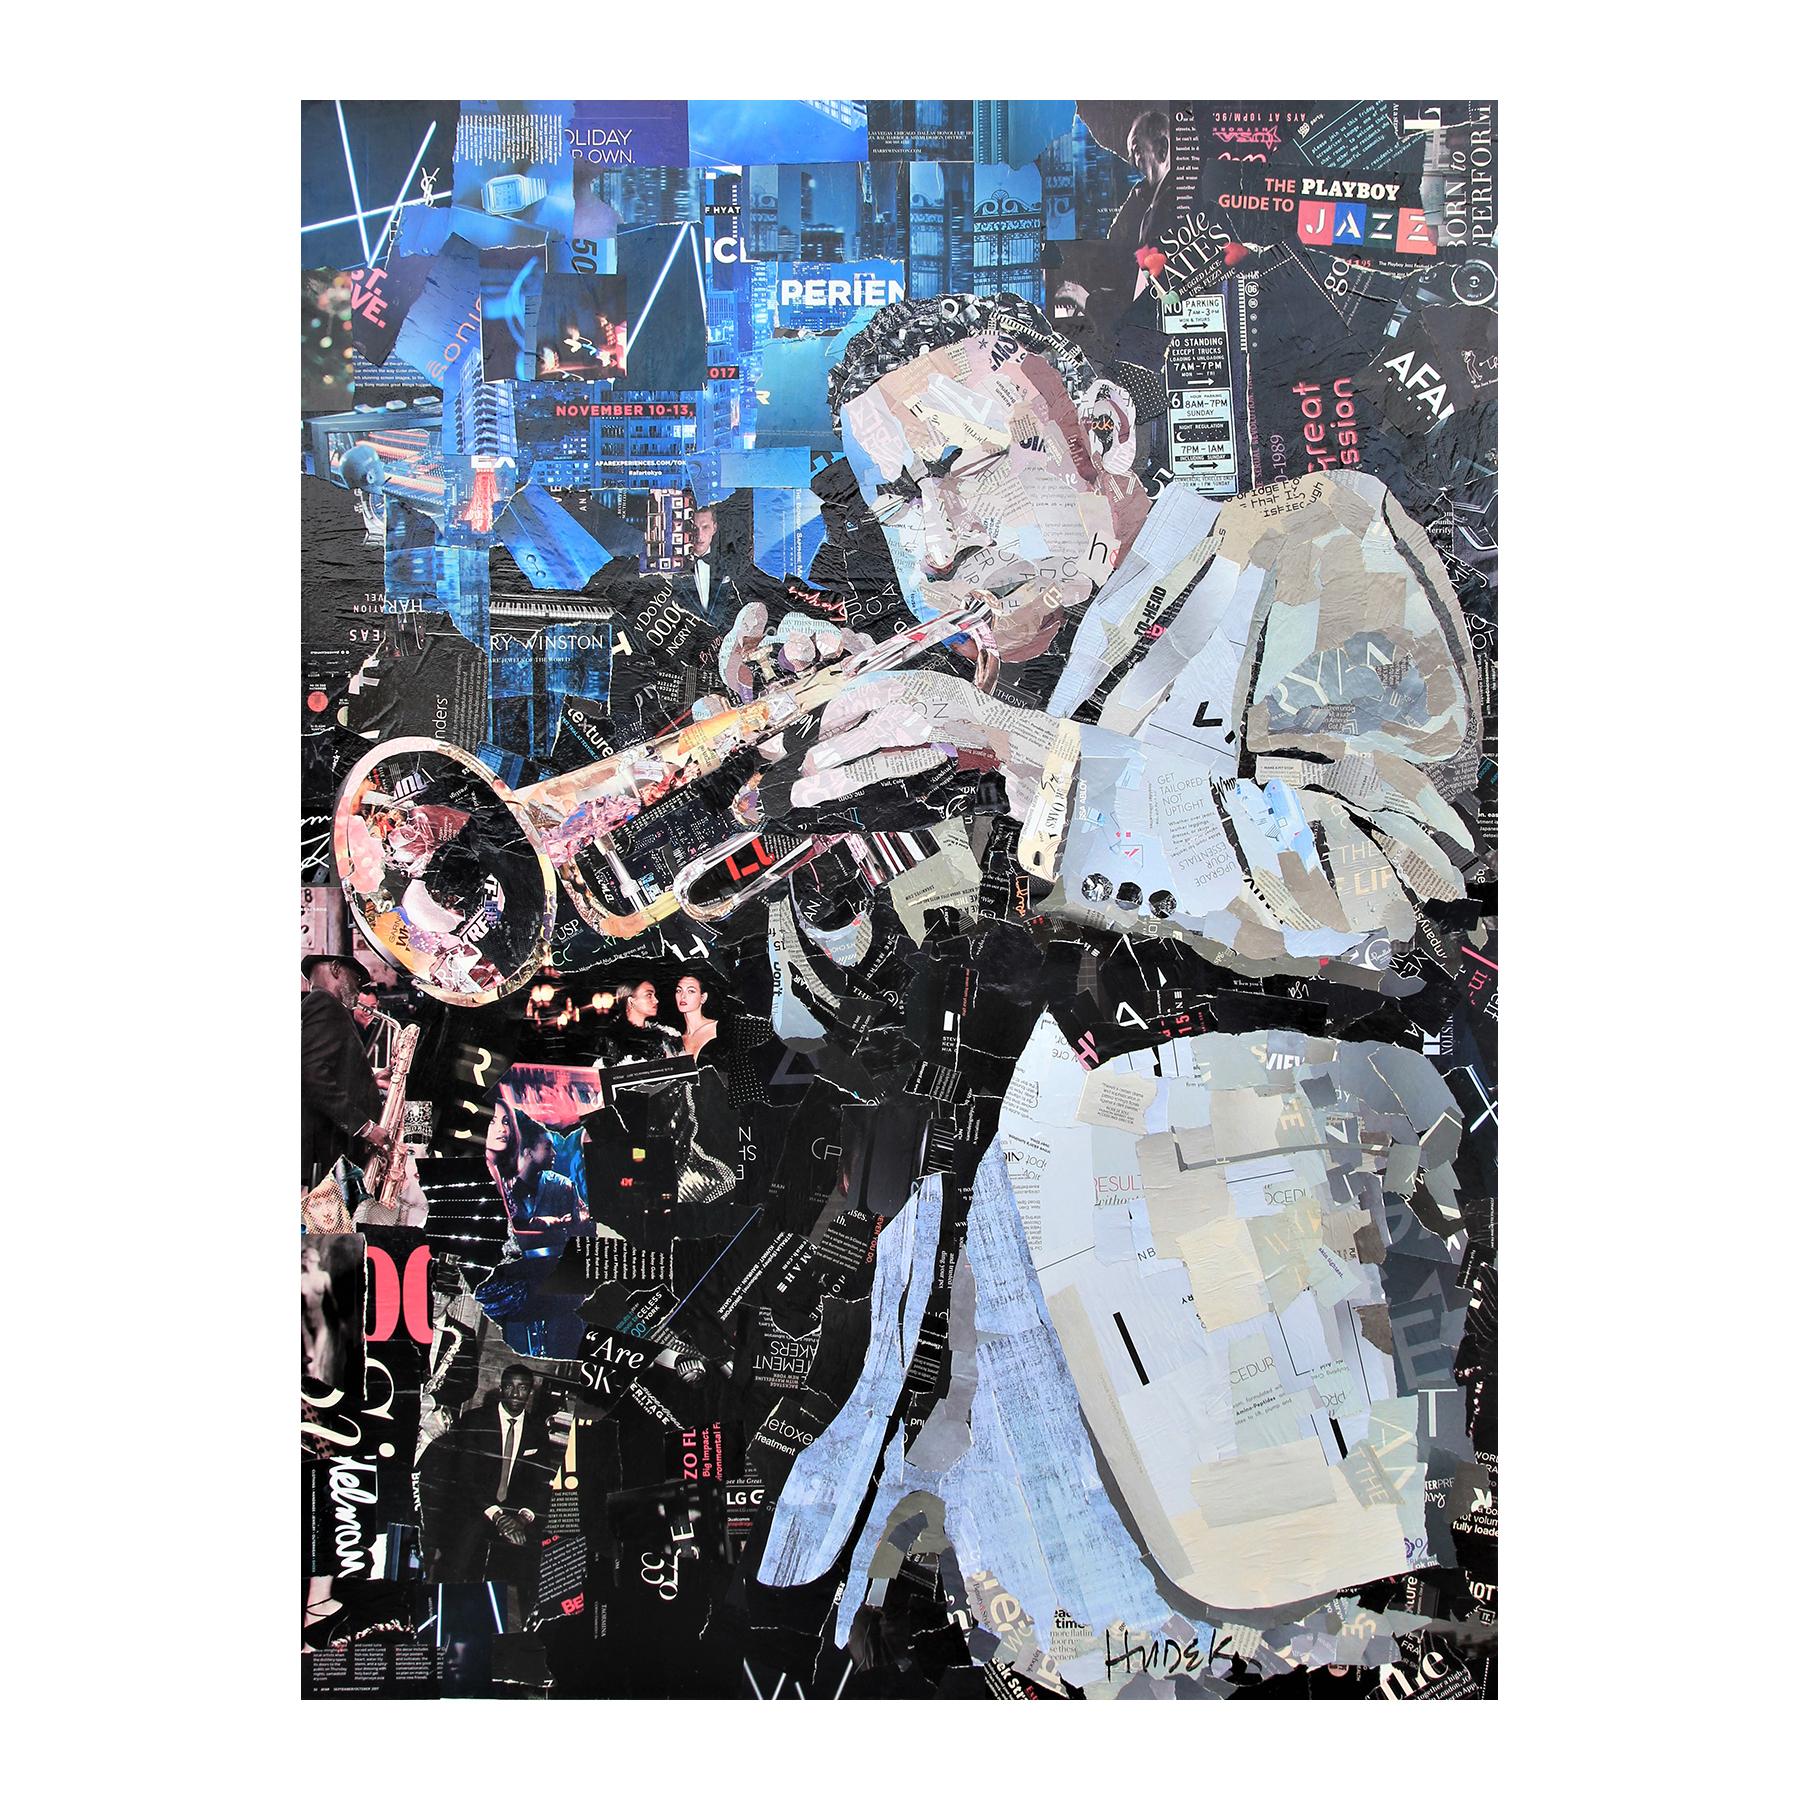 “Lee Morgan Jazz” Blue, Black, and Gray Pop Art Mixed Media Collage Portrait - Mixed Media Art by Jim Hudek